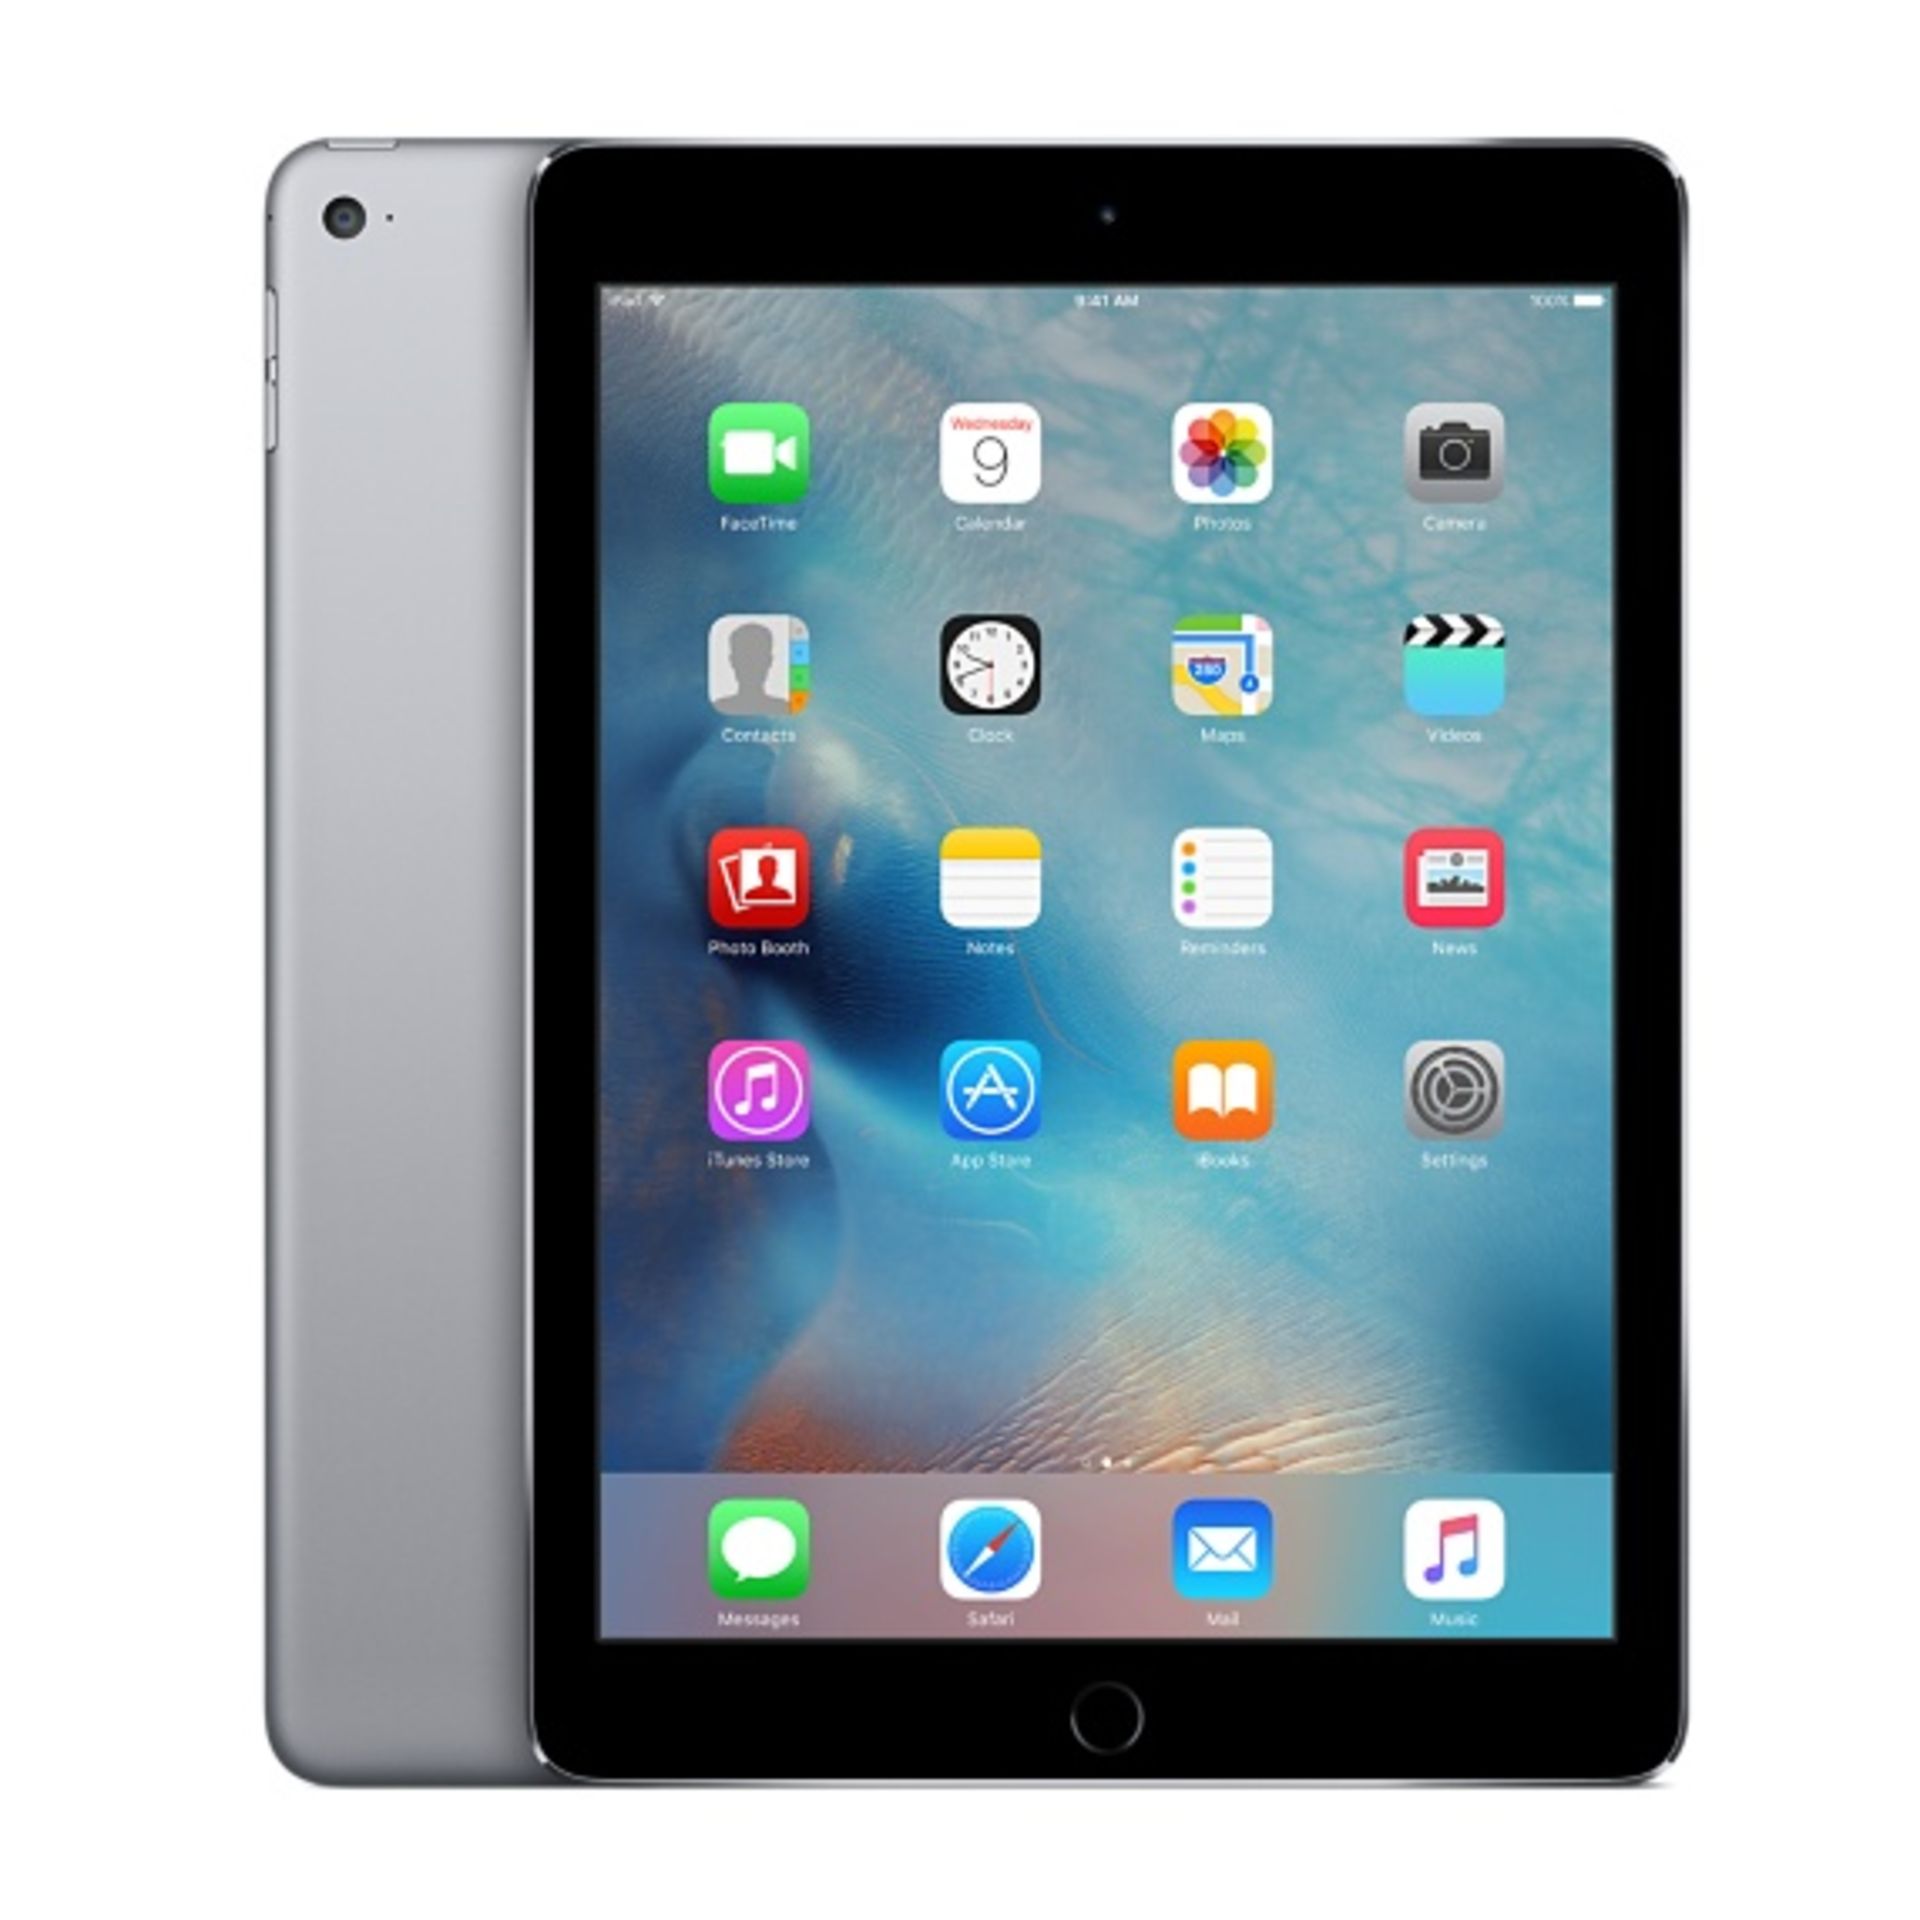 V Grade A Apple iPad Air 2 16GB Space Grey - Wi-Fi - Box and Accessories